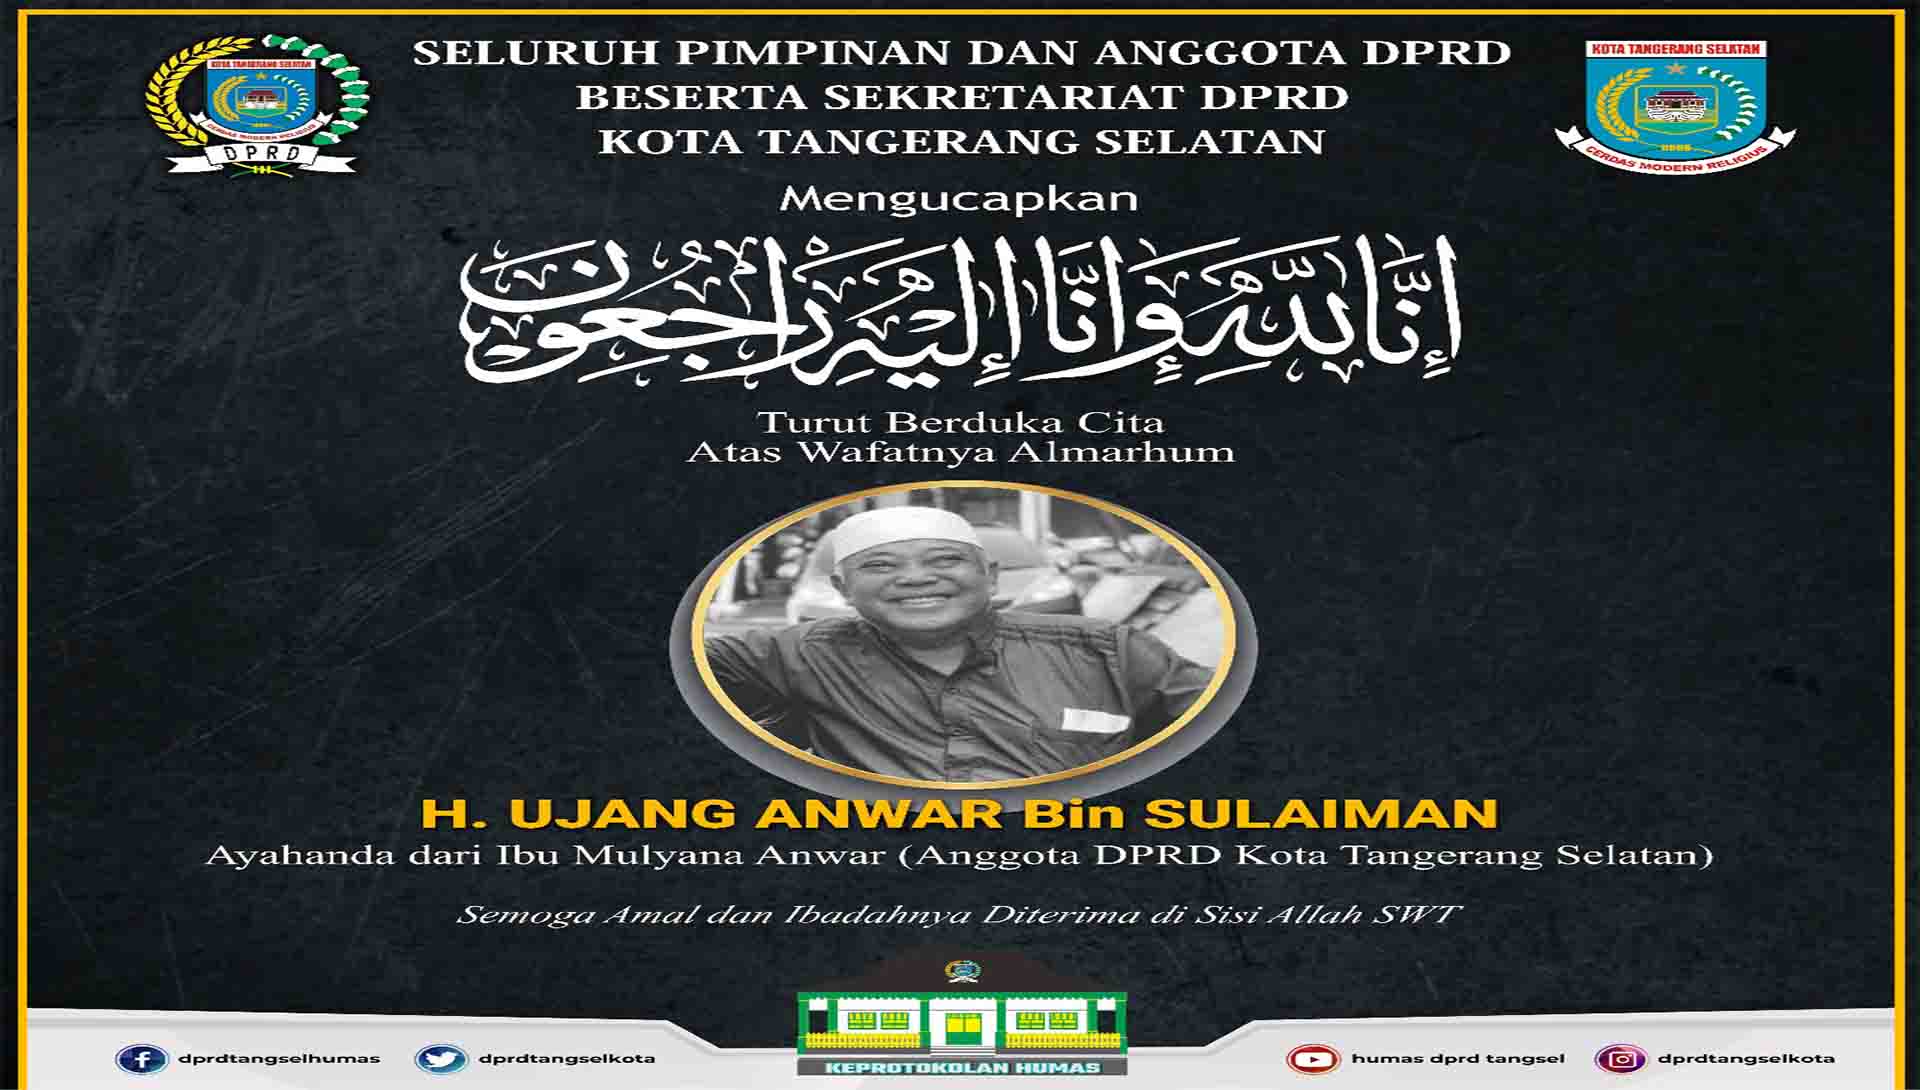 Turut Berduka Cita atas wafatnya H. Ujang Anwar Bin Sulaiman